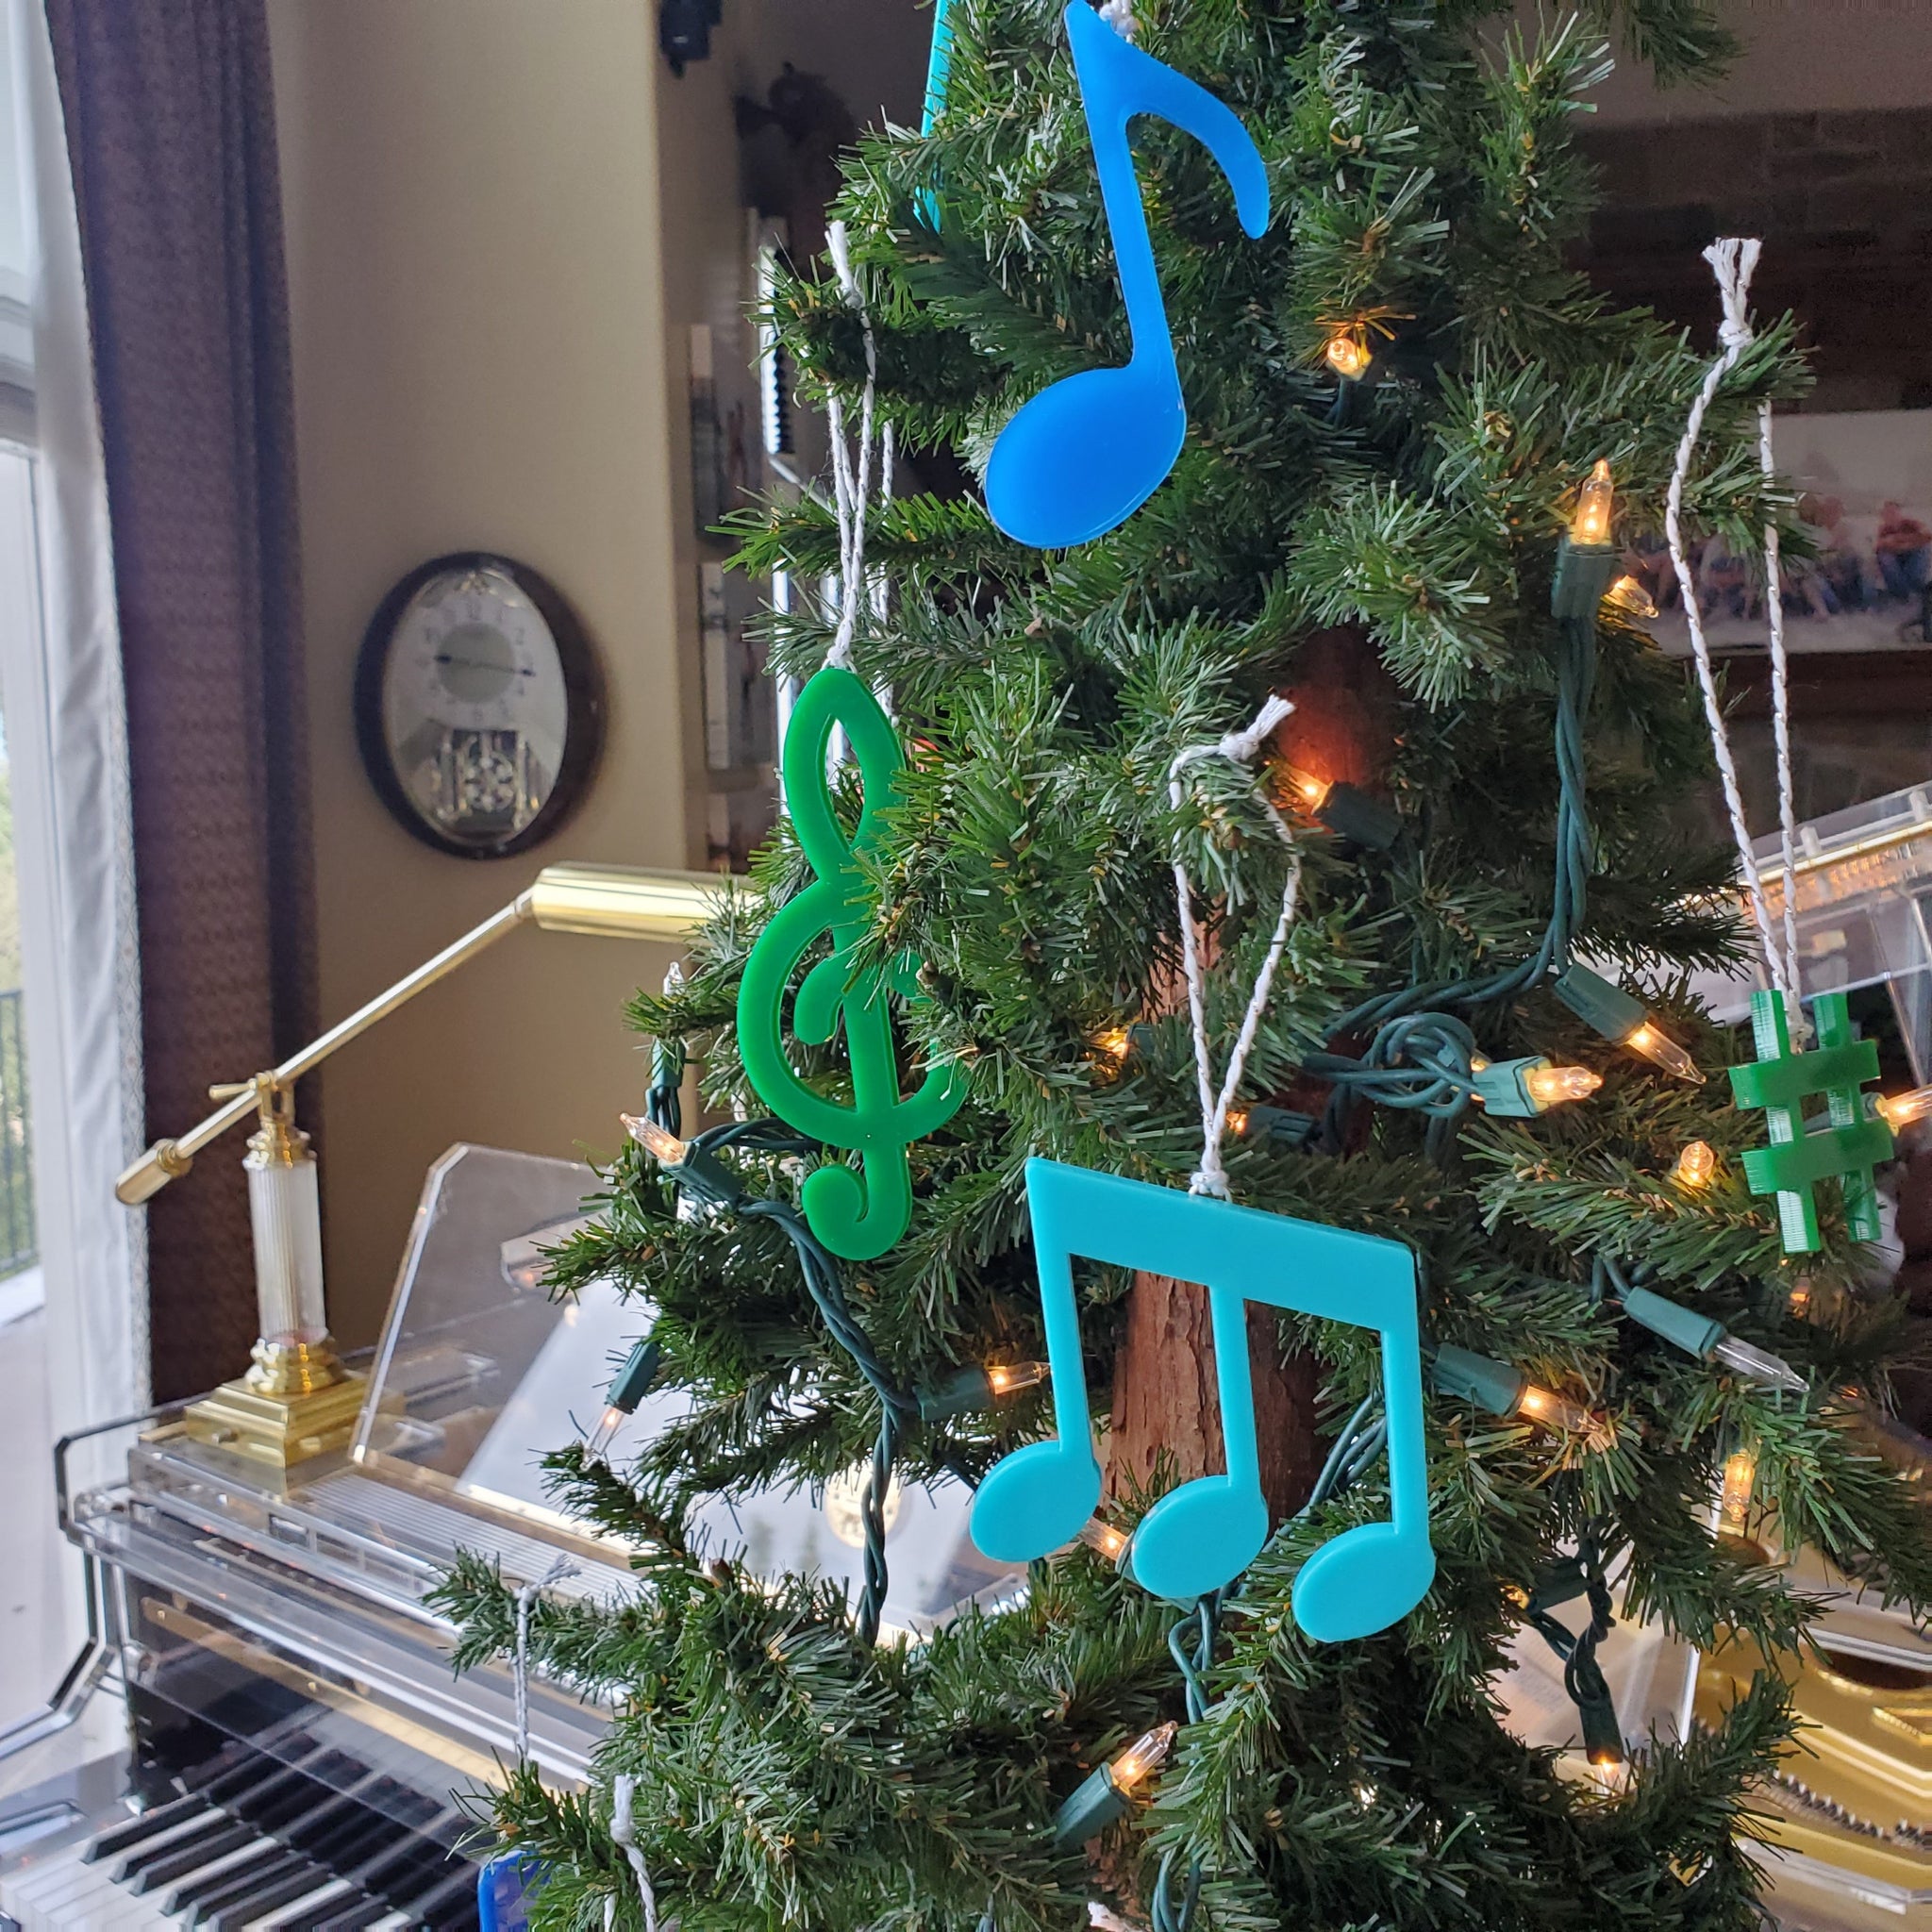 christmas music ornaments